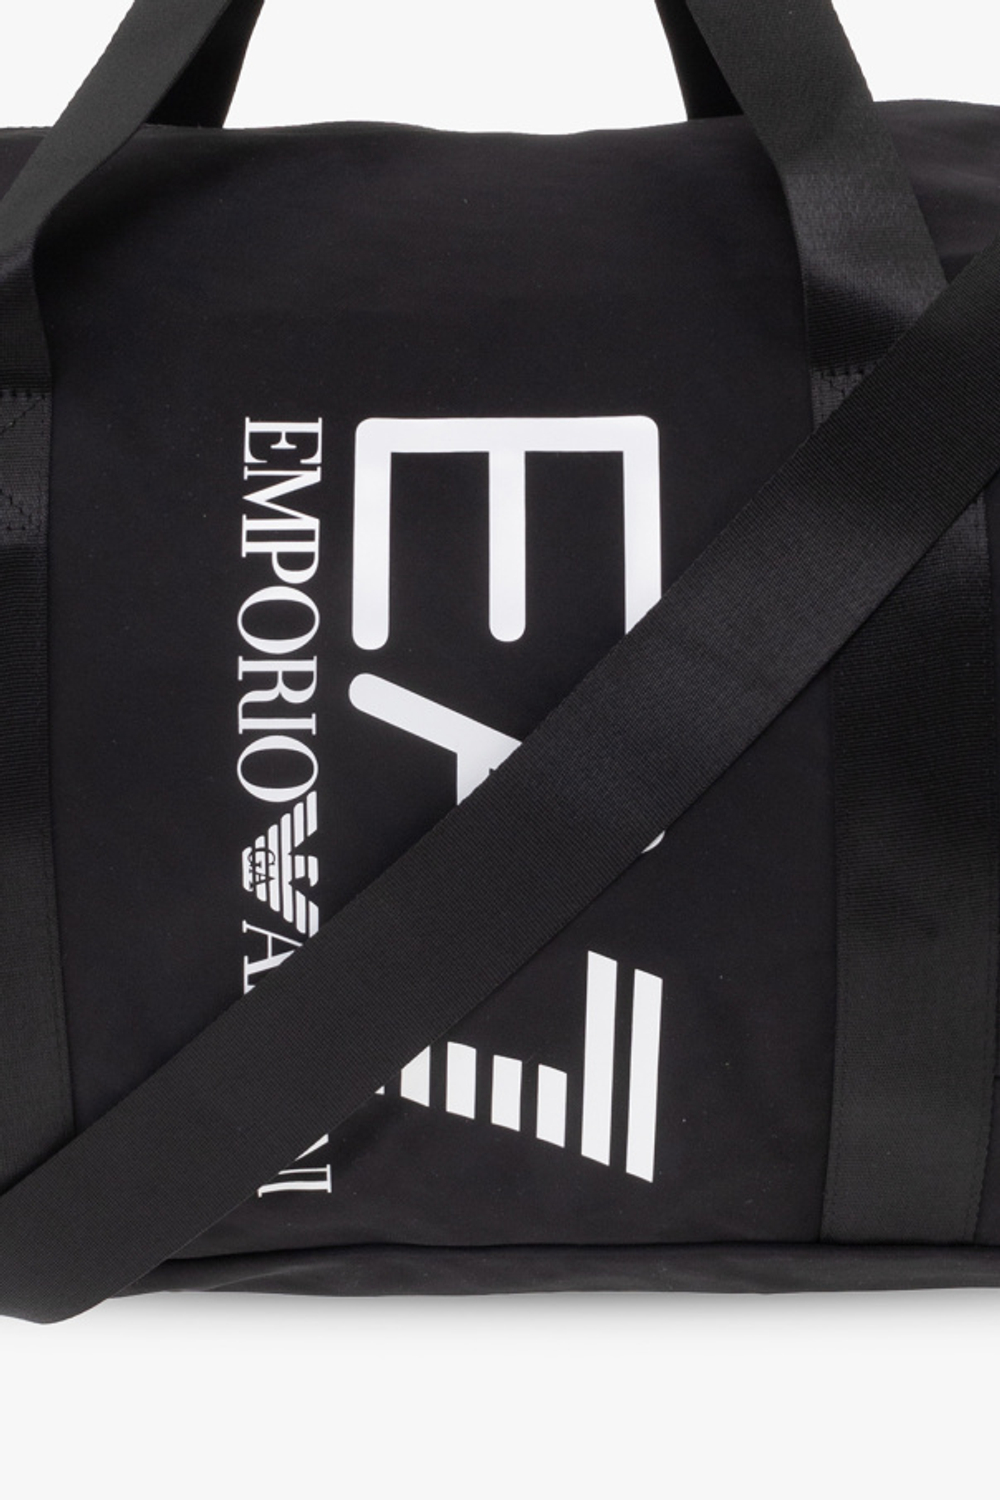 Спортивная сумка EA7